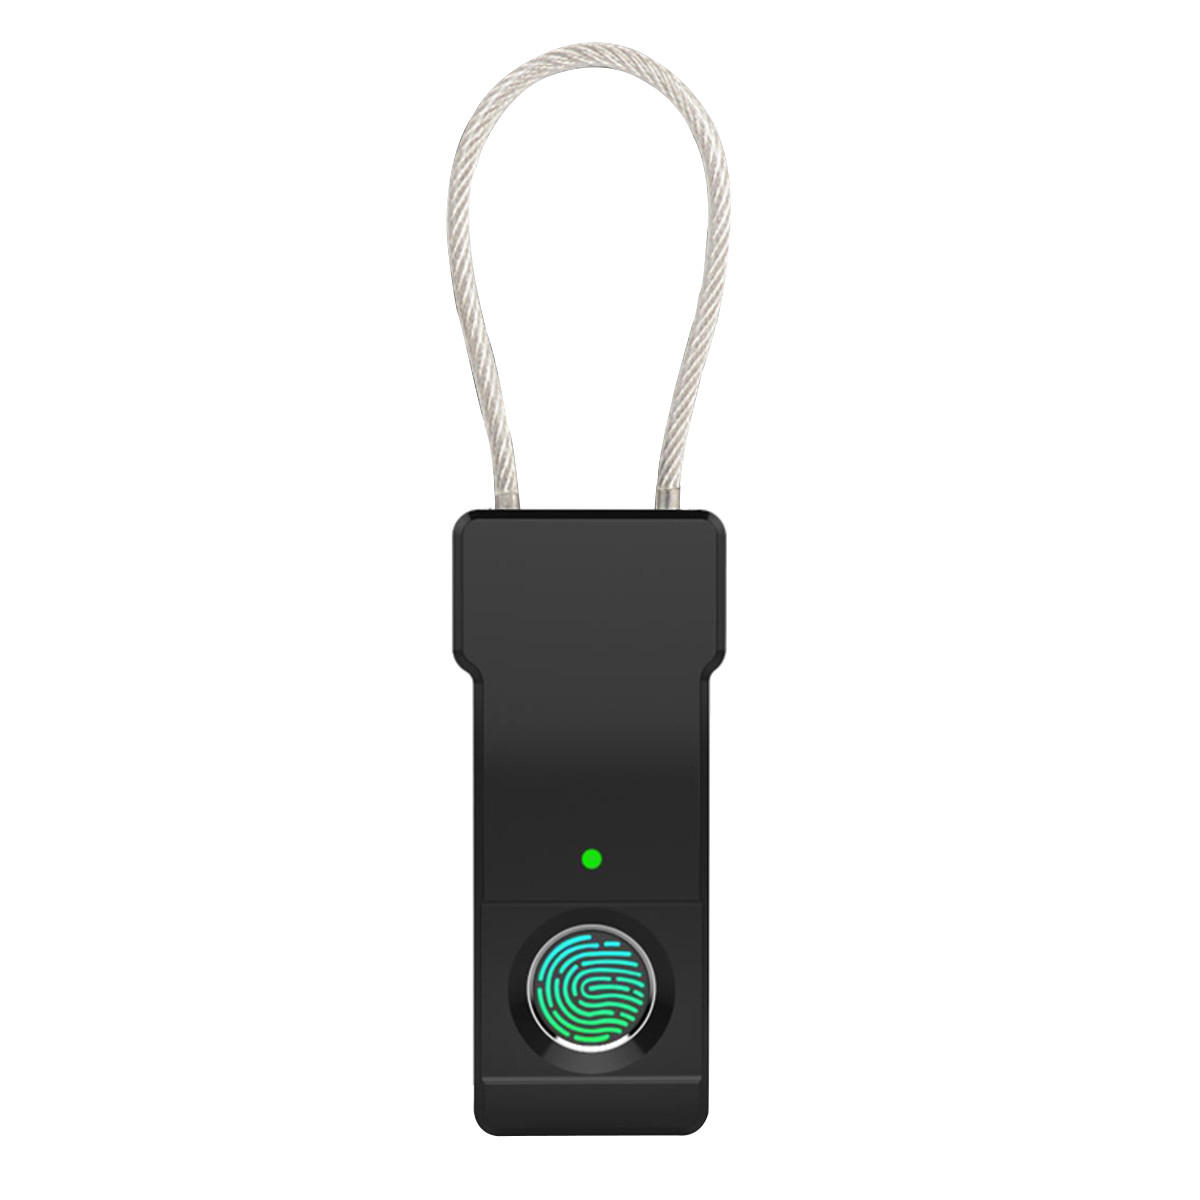 Draagbare USB Oplaadbare Elektronisch Slot Anti-Diefstal Beveiliging Vingerafdruk Slot Bagage Slot S